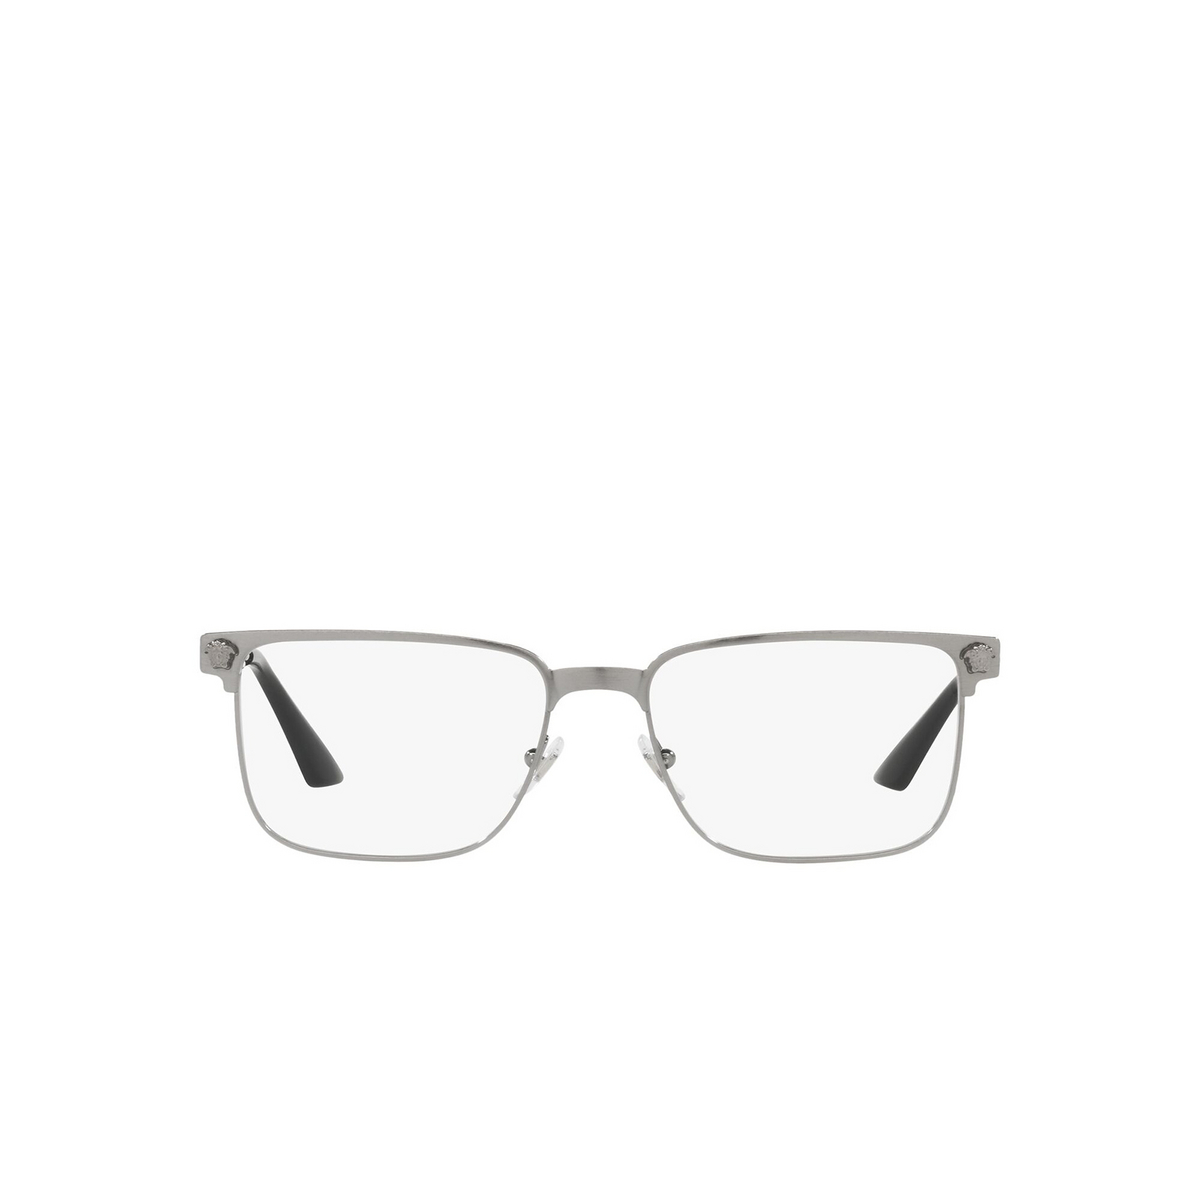 Versace® Rectangle Eyeglasses: VE1276 color Brushed Gunmetal 1262 - front view.